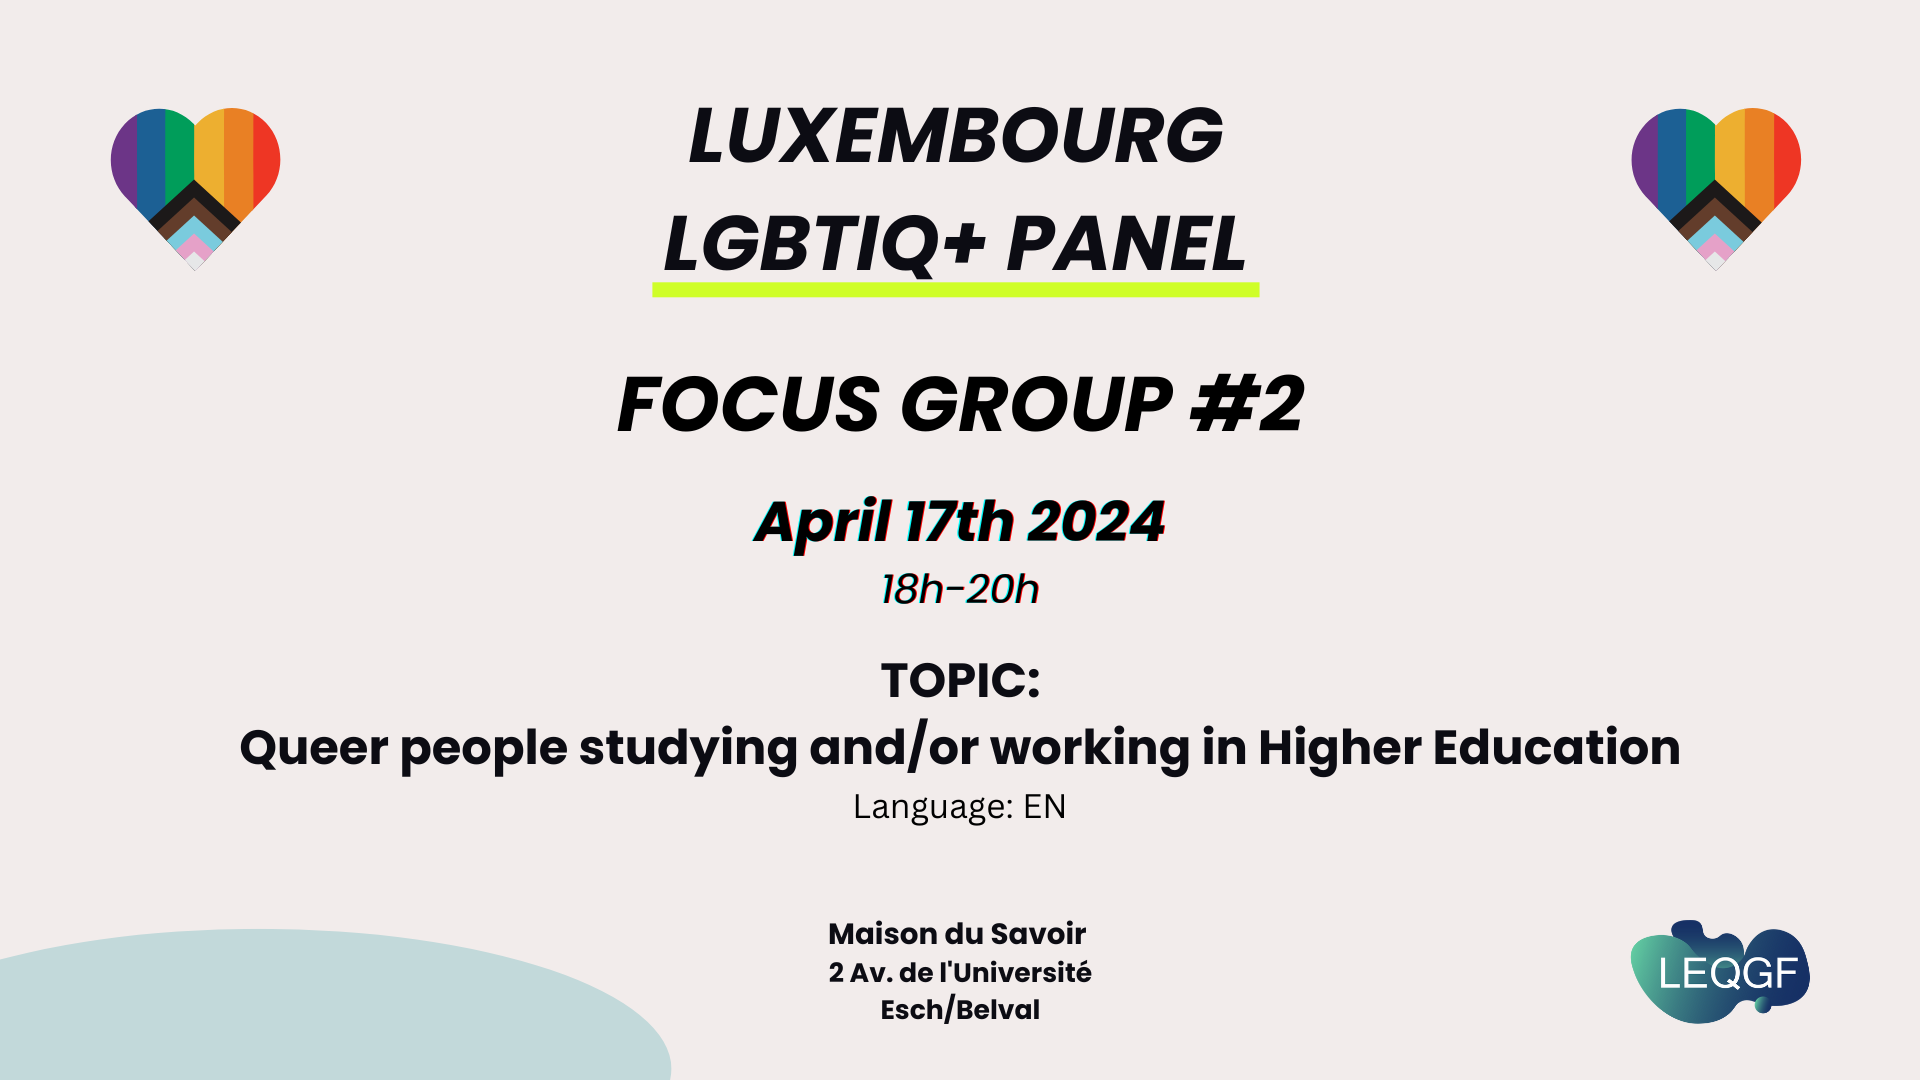 Luxembourg LGBTIQ+ panel